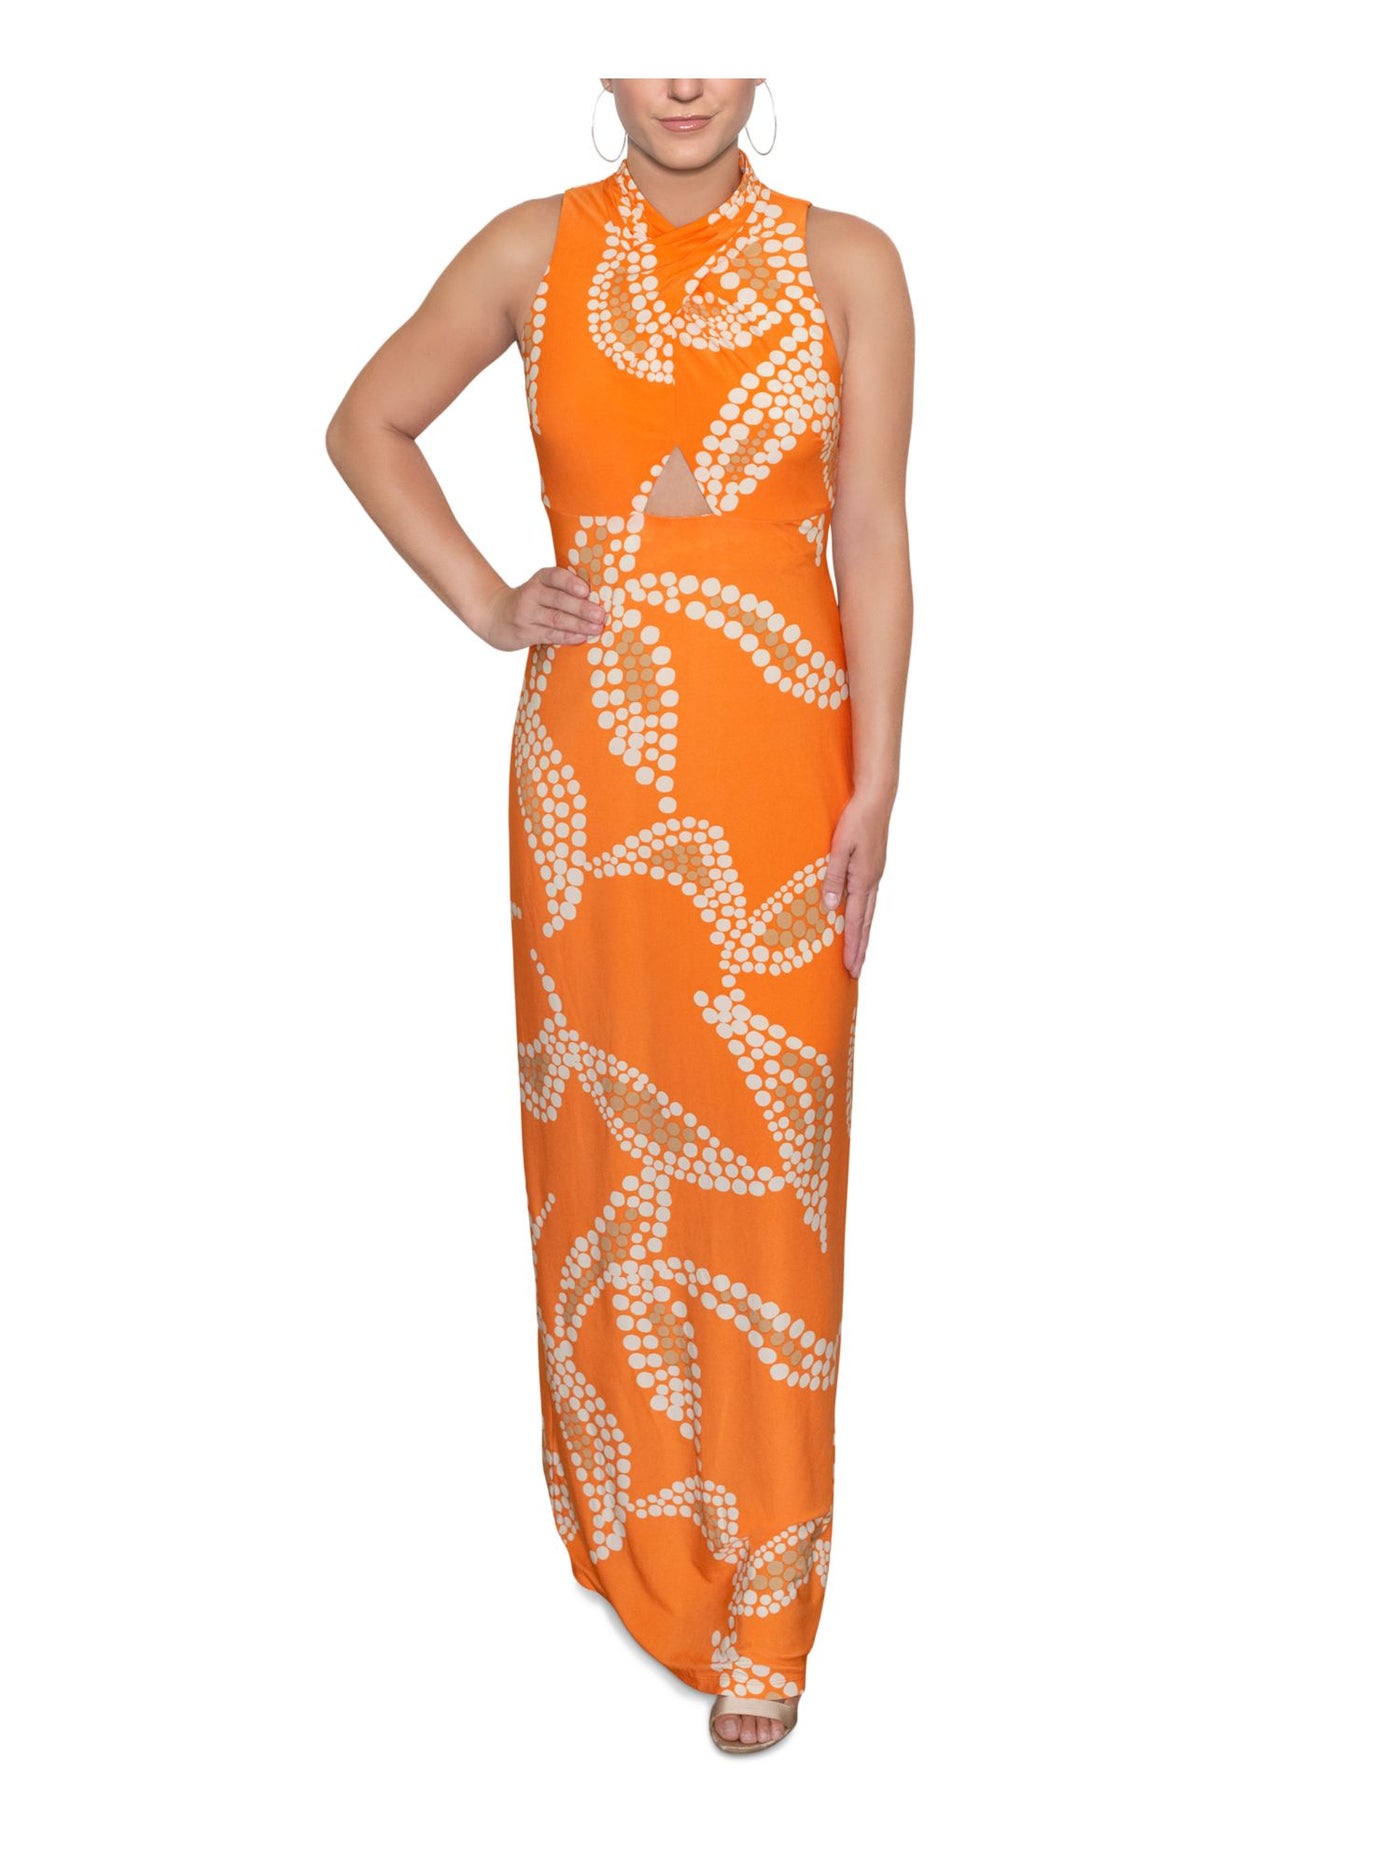 RACHEL RACHEL ROY Womens Orange Zippered Cut Out Back Slit Printed Sleeveless Halter Maxi Party Sheath Dress L